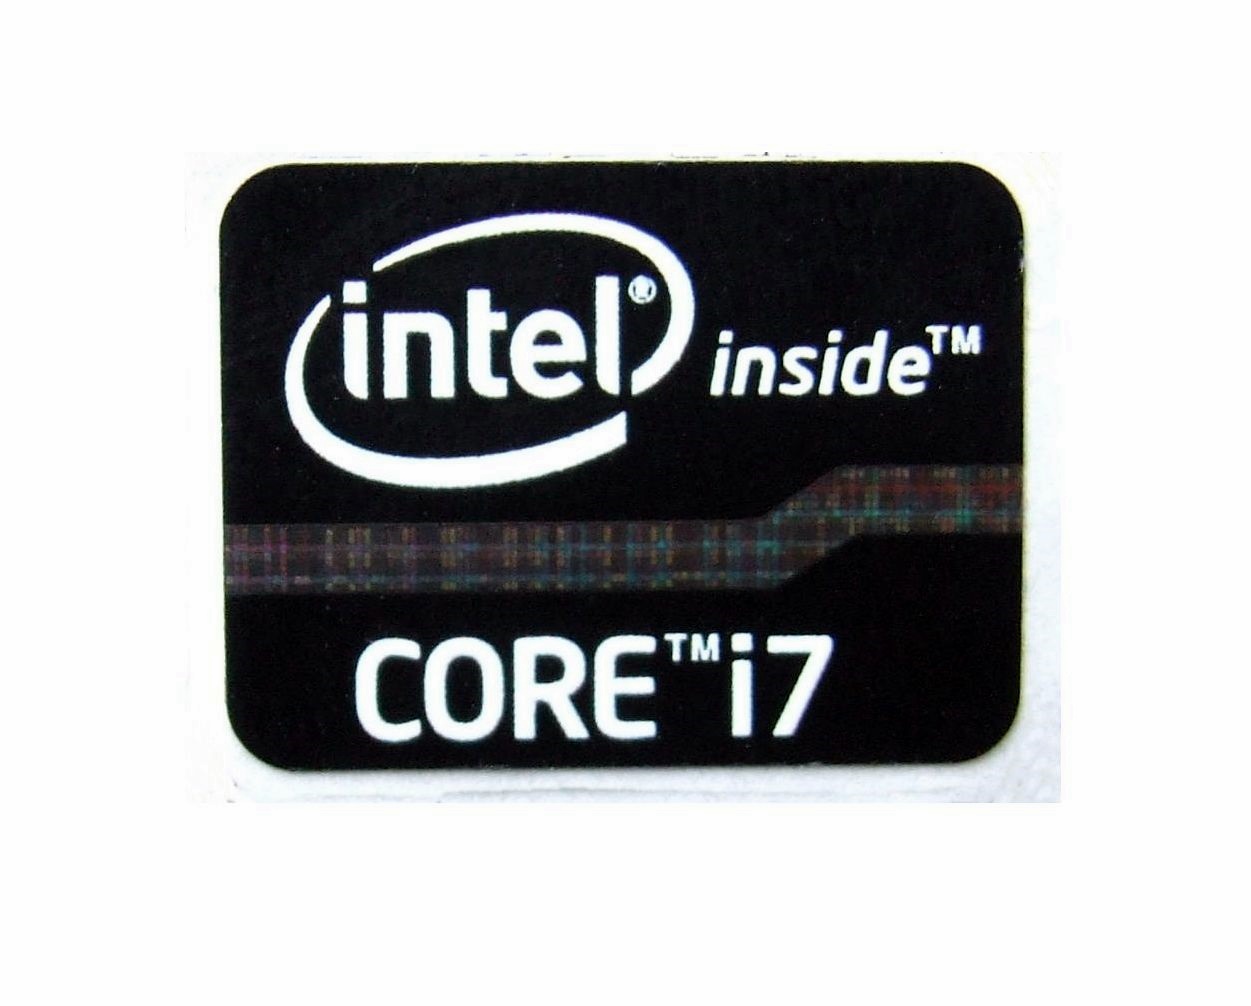 Наклейки intel. Наклейка Intel Core i7 inside. Intel Core i5 inside наклейка. Наклейки Интел кор ай 7. Наклейка Интел кор ай 5.